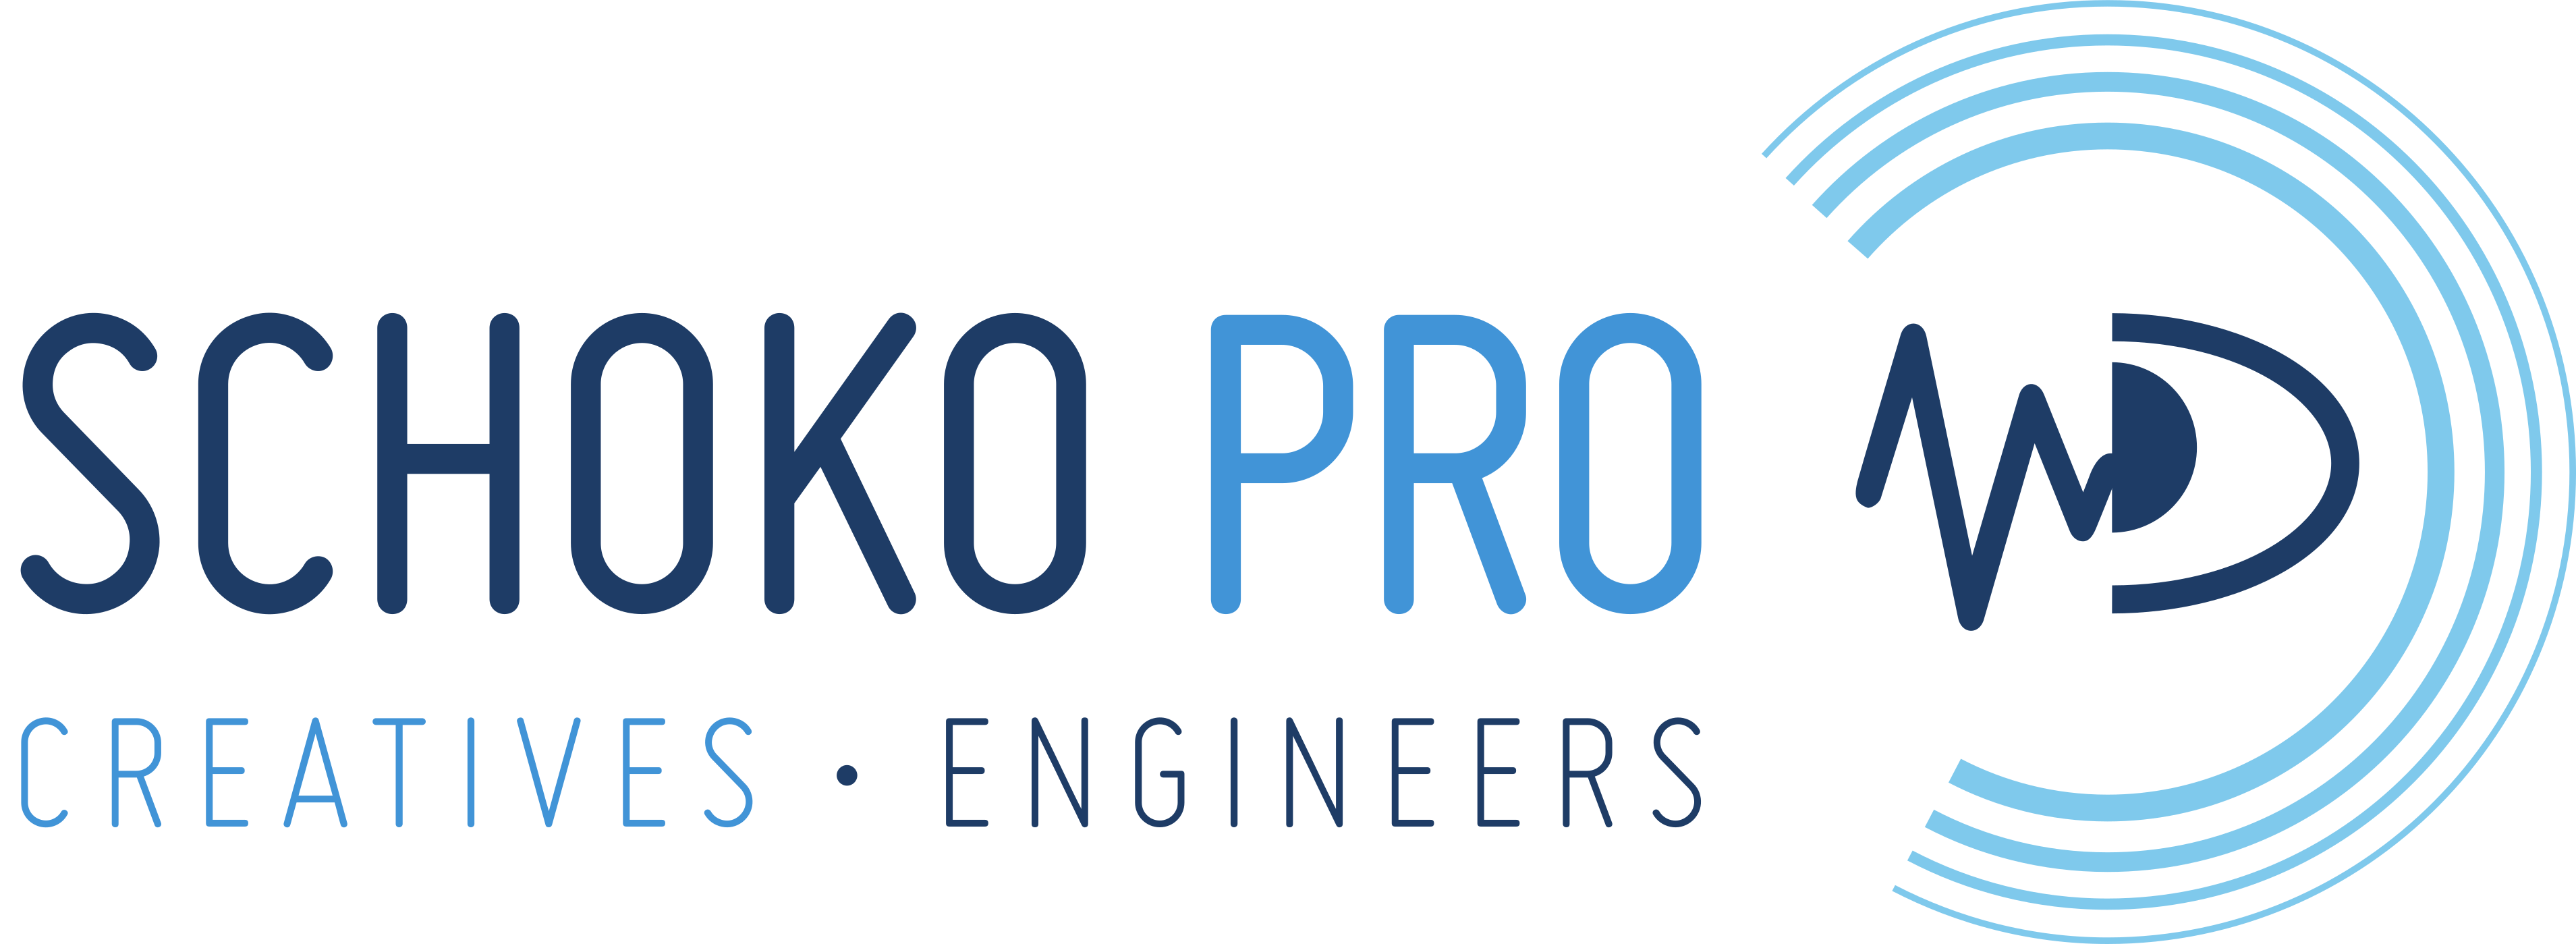 Schoko Pro Creatives Engineers